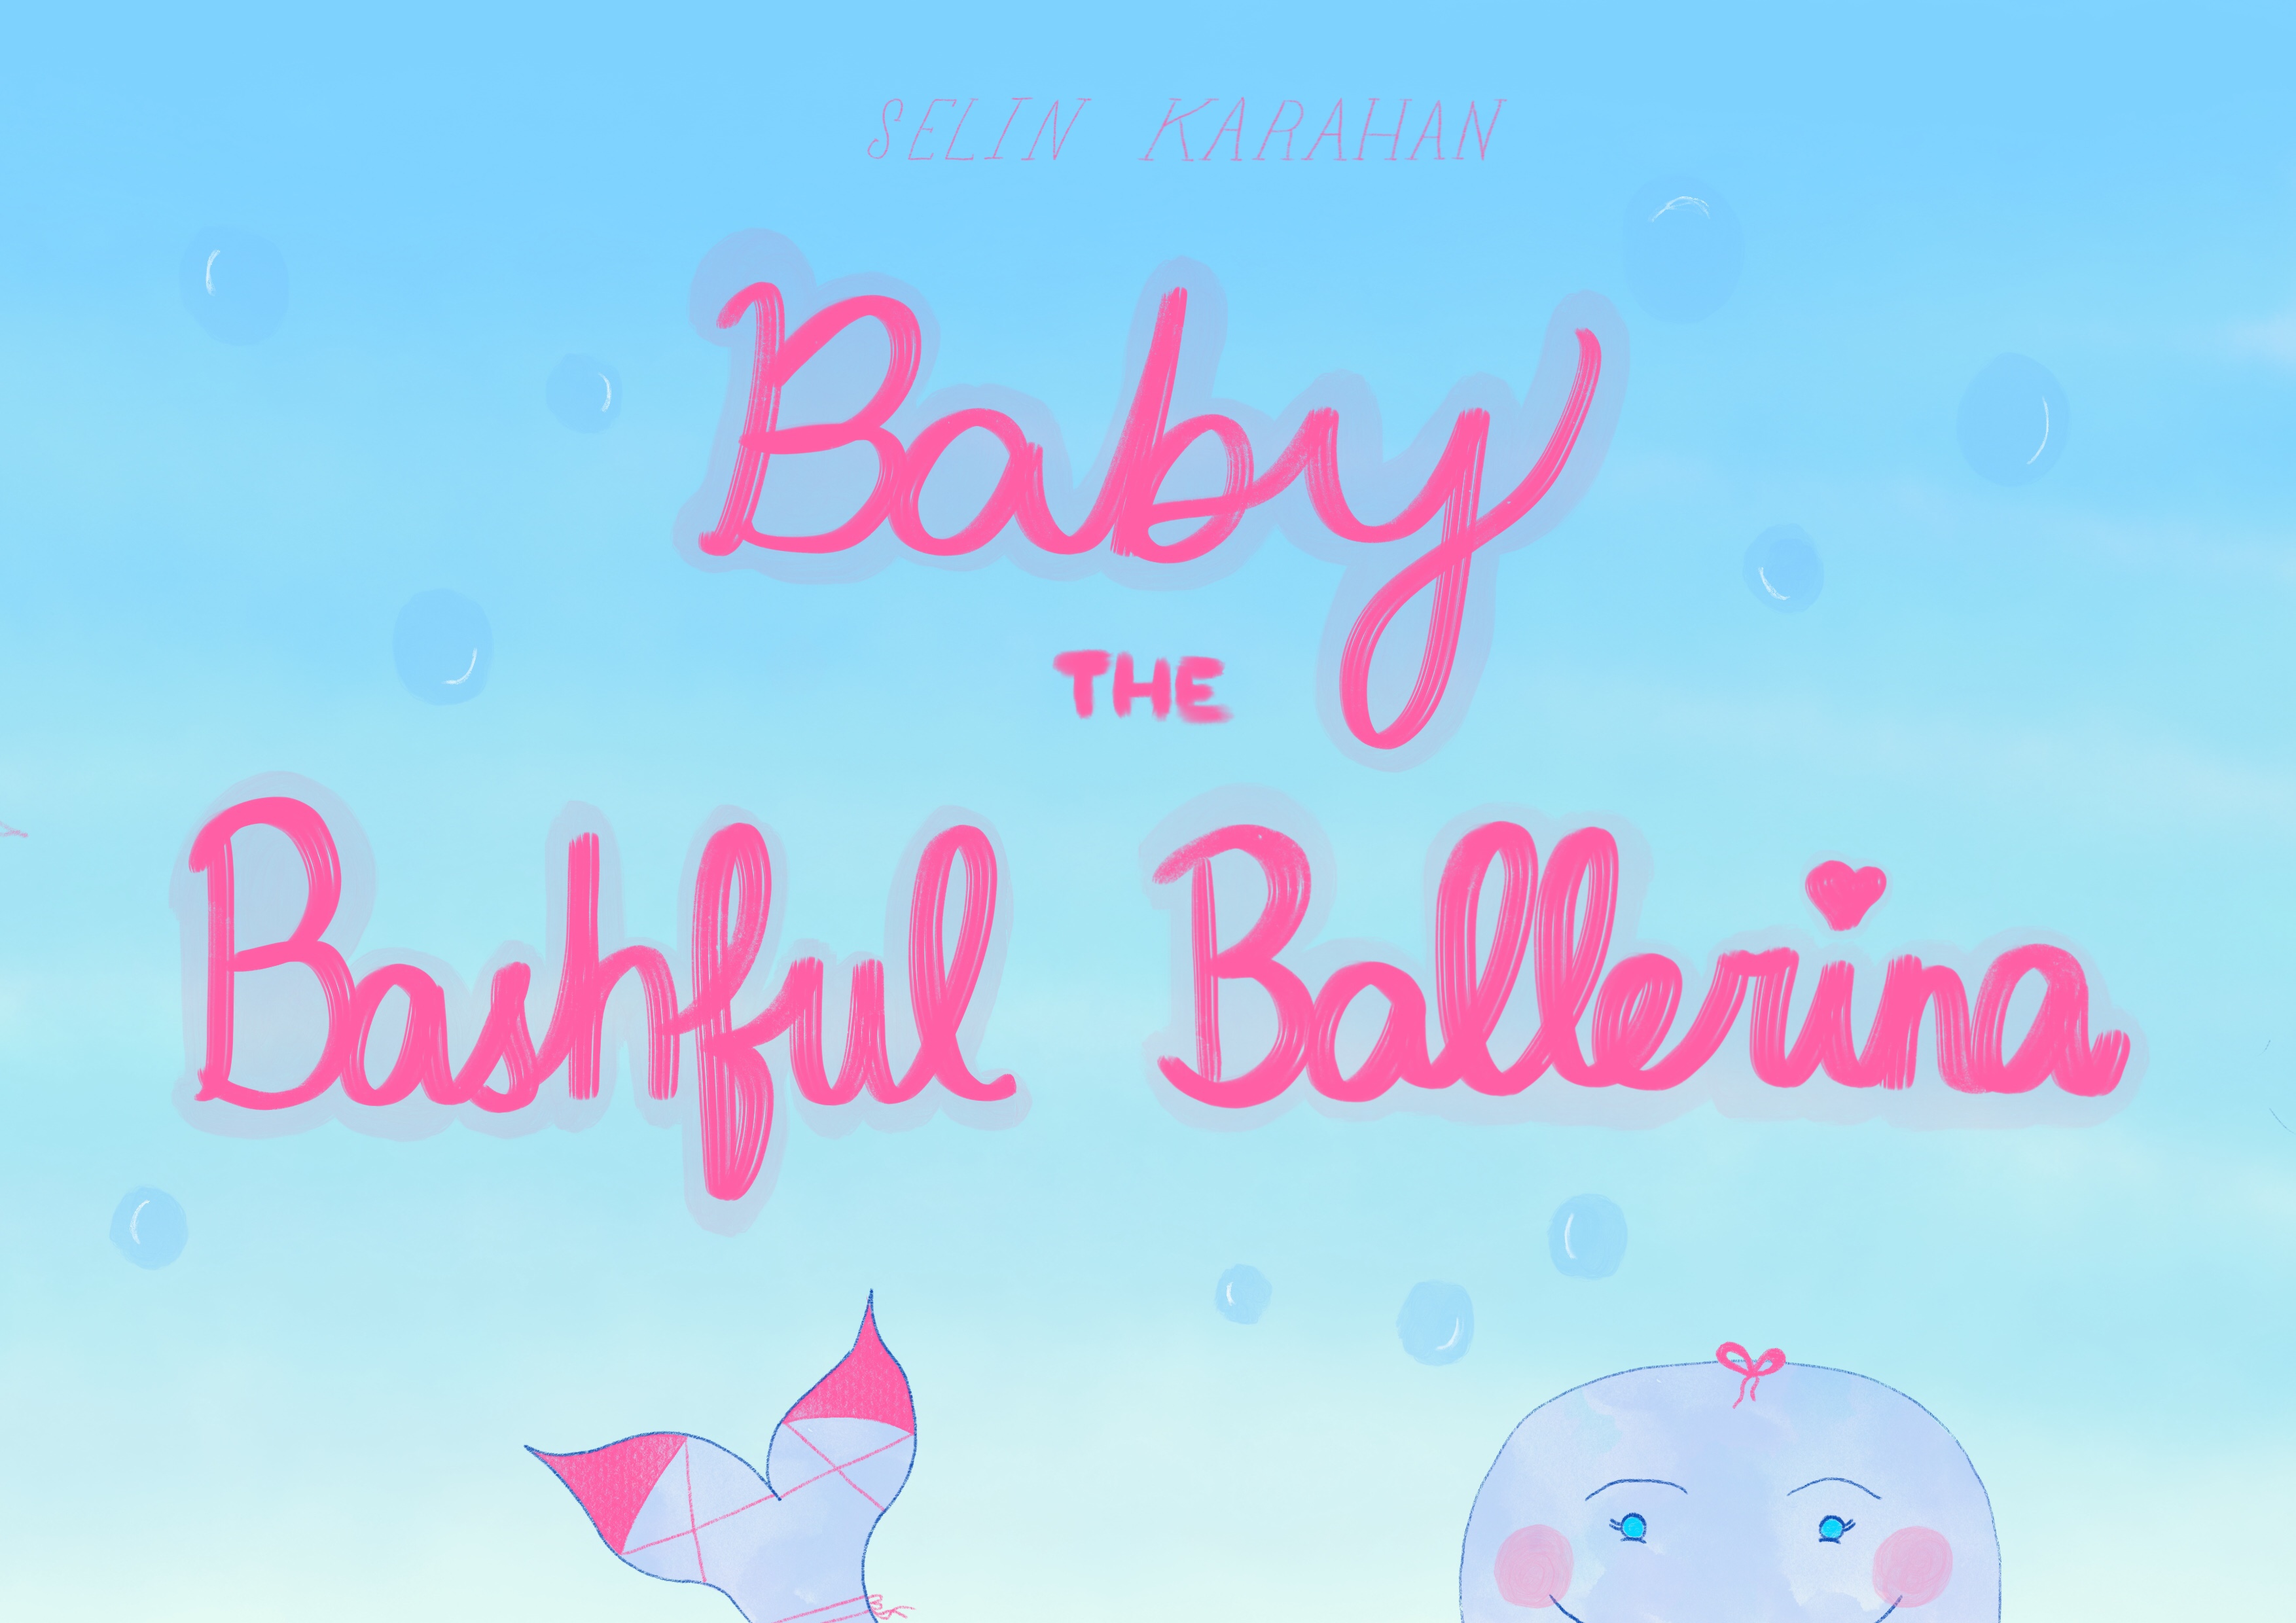 Children’s Book Illustrating: Semester Story “Baby the Bashful Ballerina”